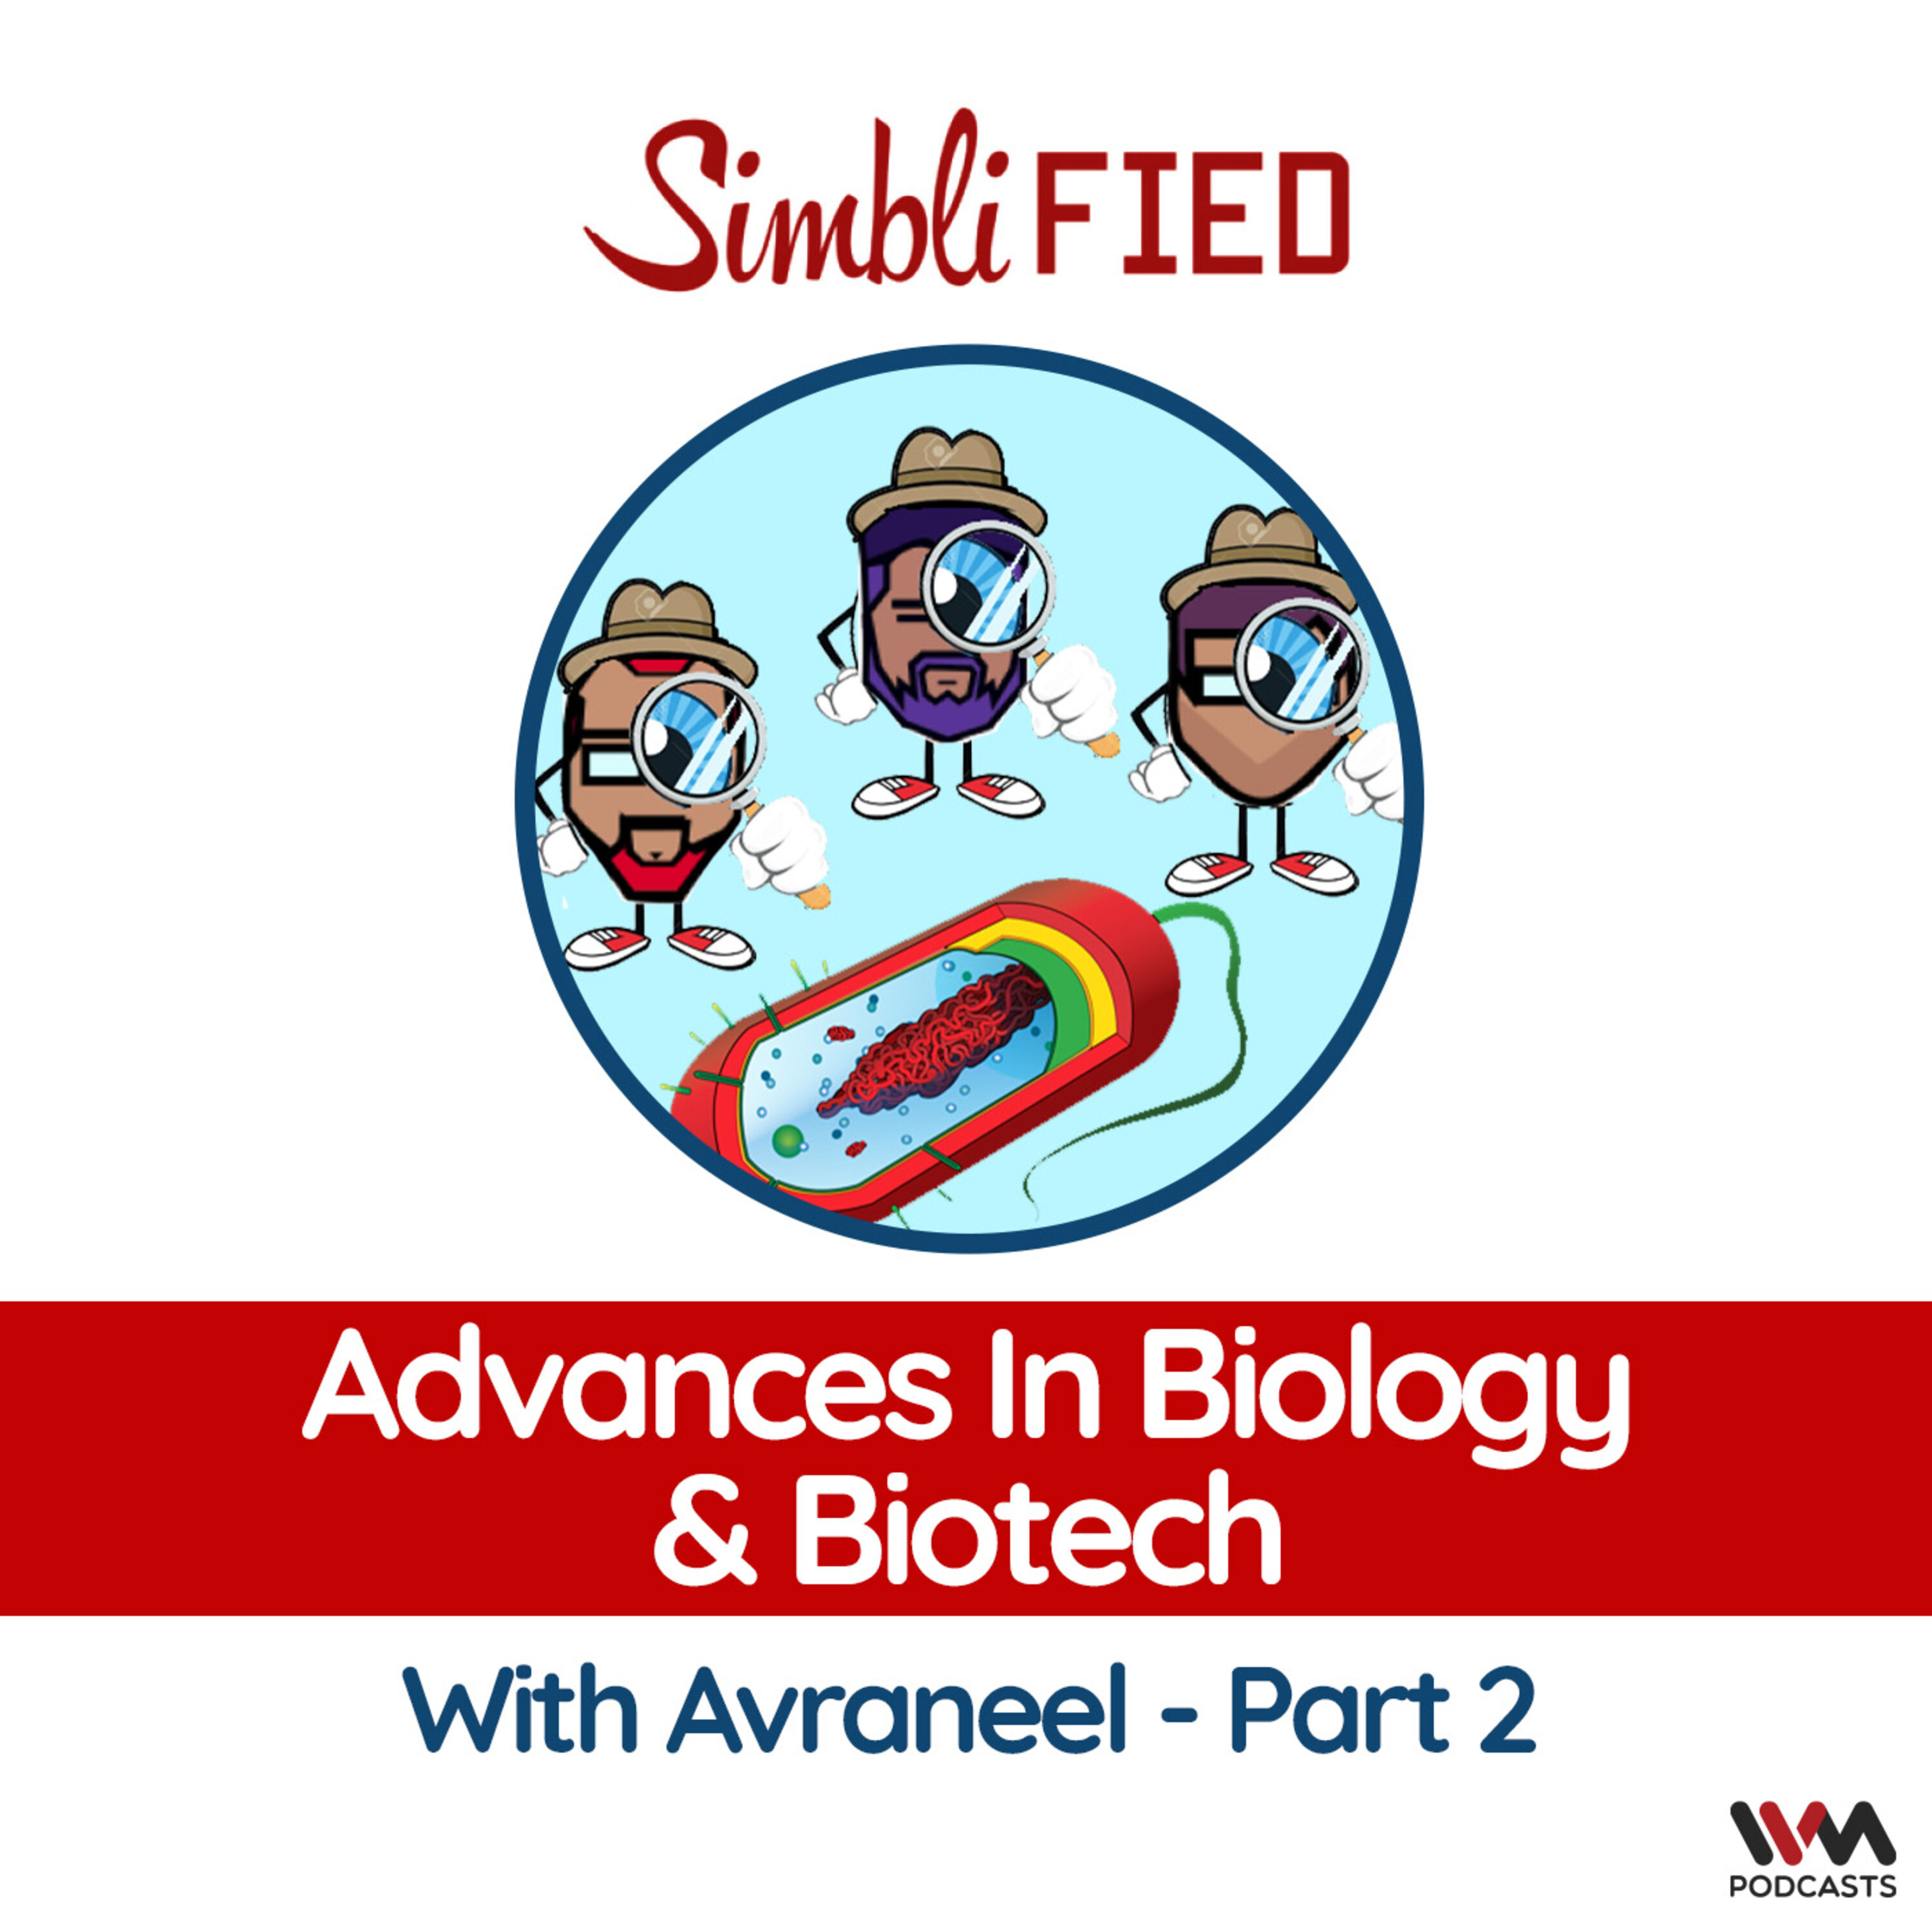 Advances in biology & biotech: With Avraneel Part 2